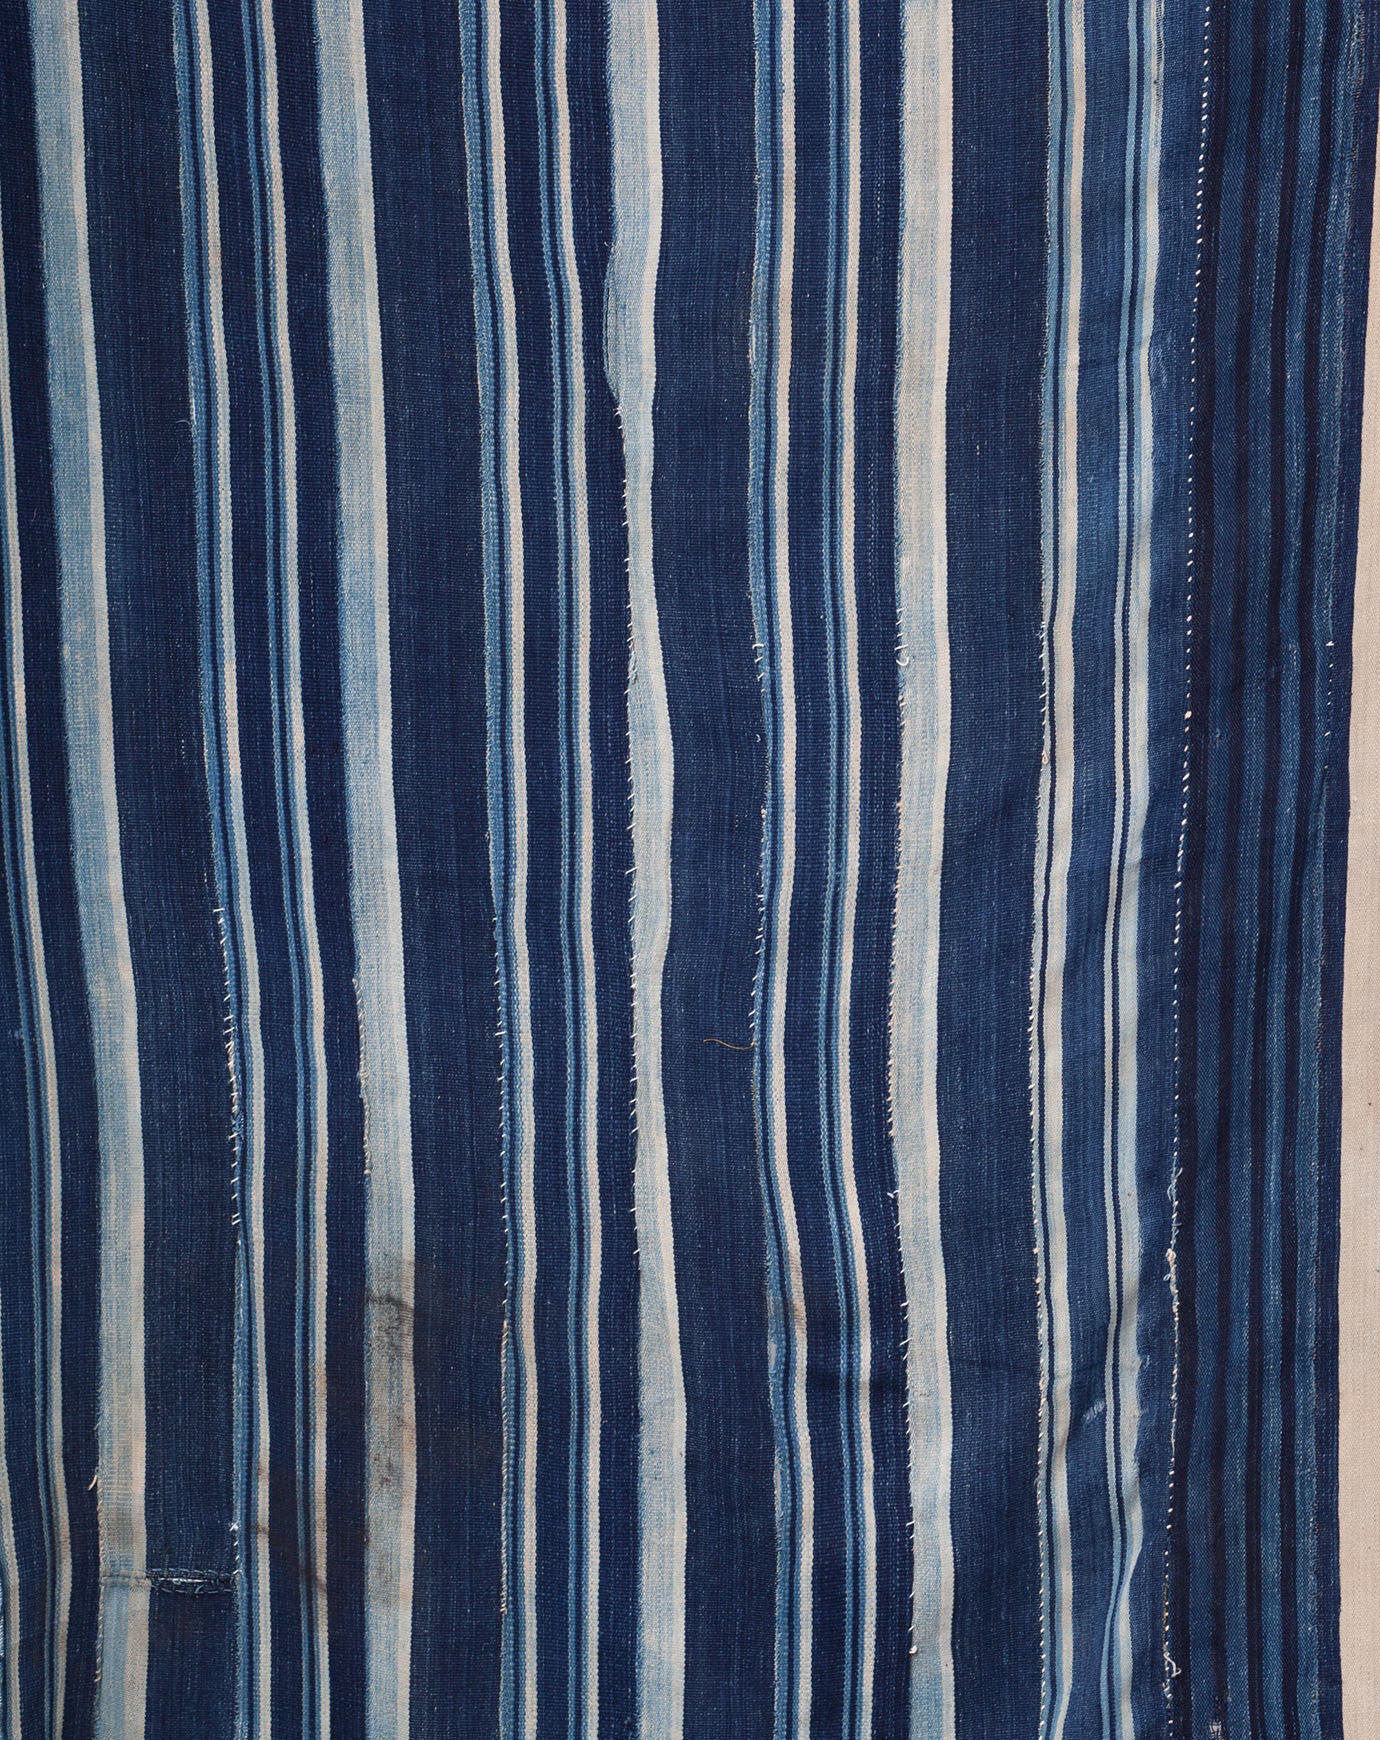 Vintage Striped Dyed Textile in Indigo | Covet + Lou